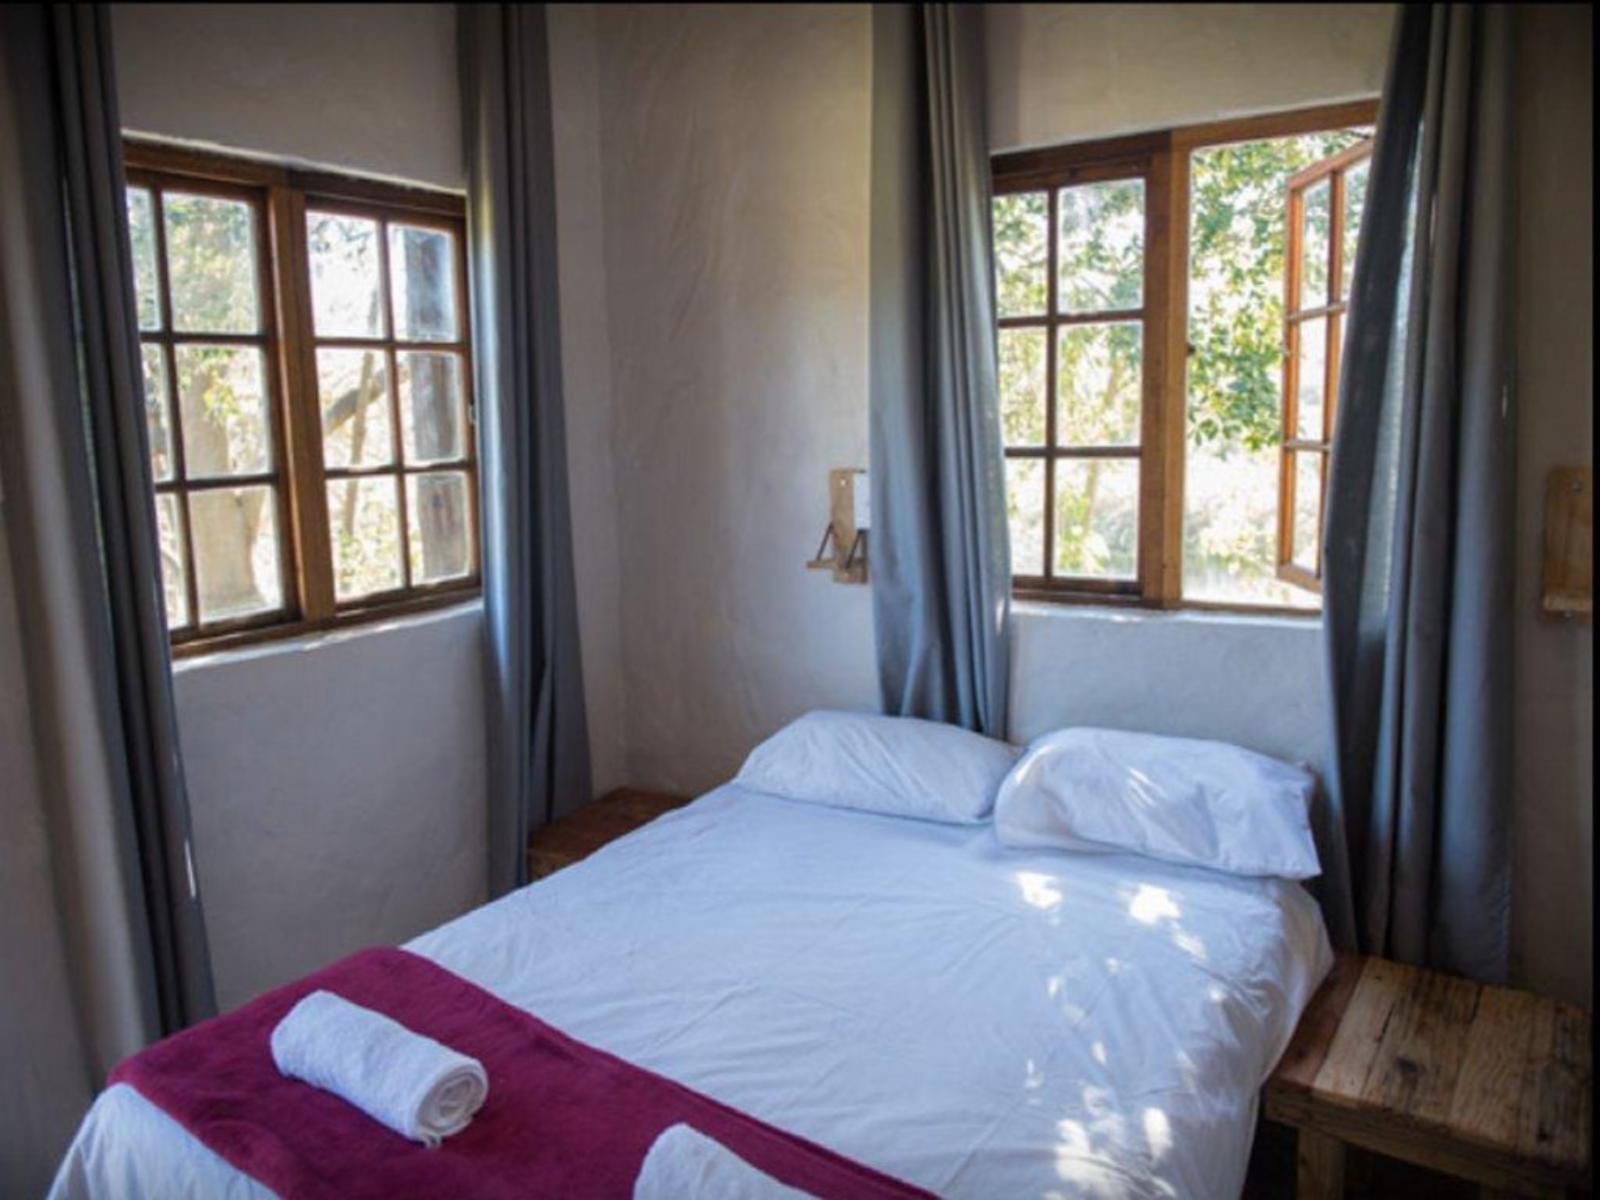 De Uijlenes Gansbaai Western Cape South Africa Window, Architecture, Bedroom